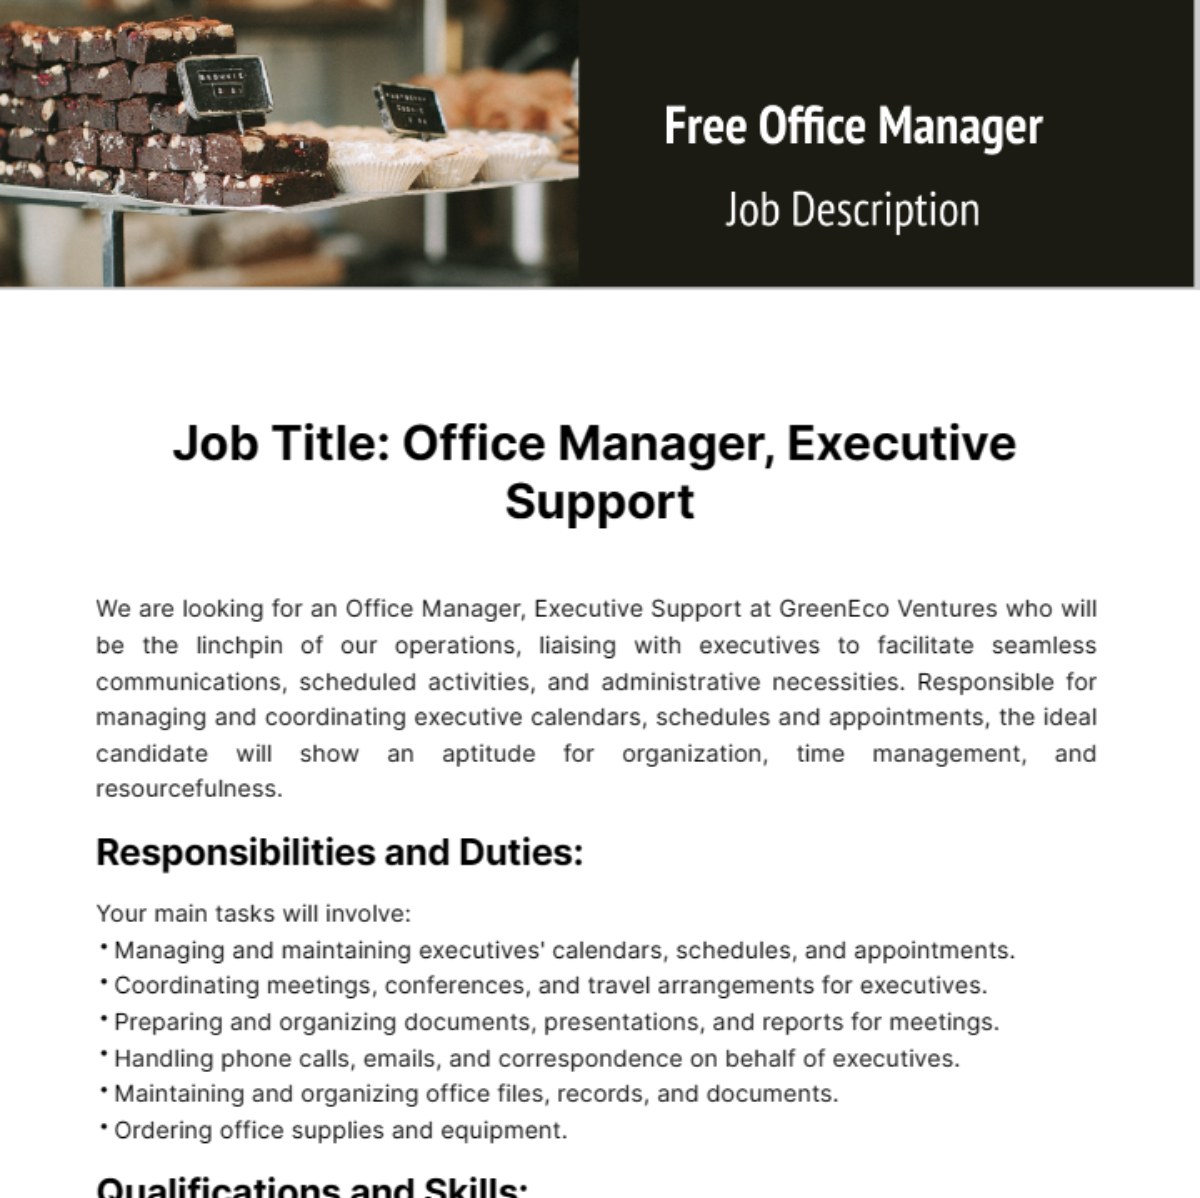 Free Office Manager Job Description Template